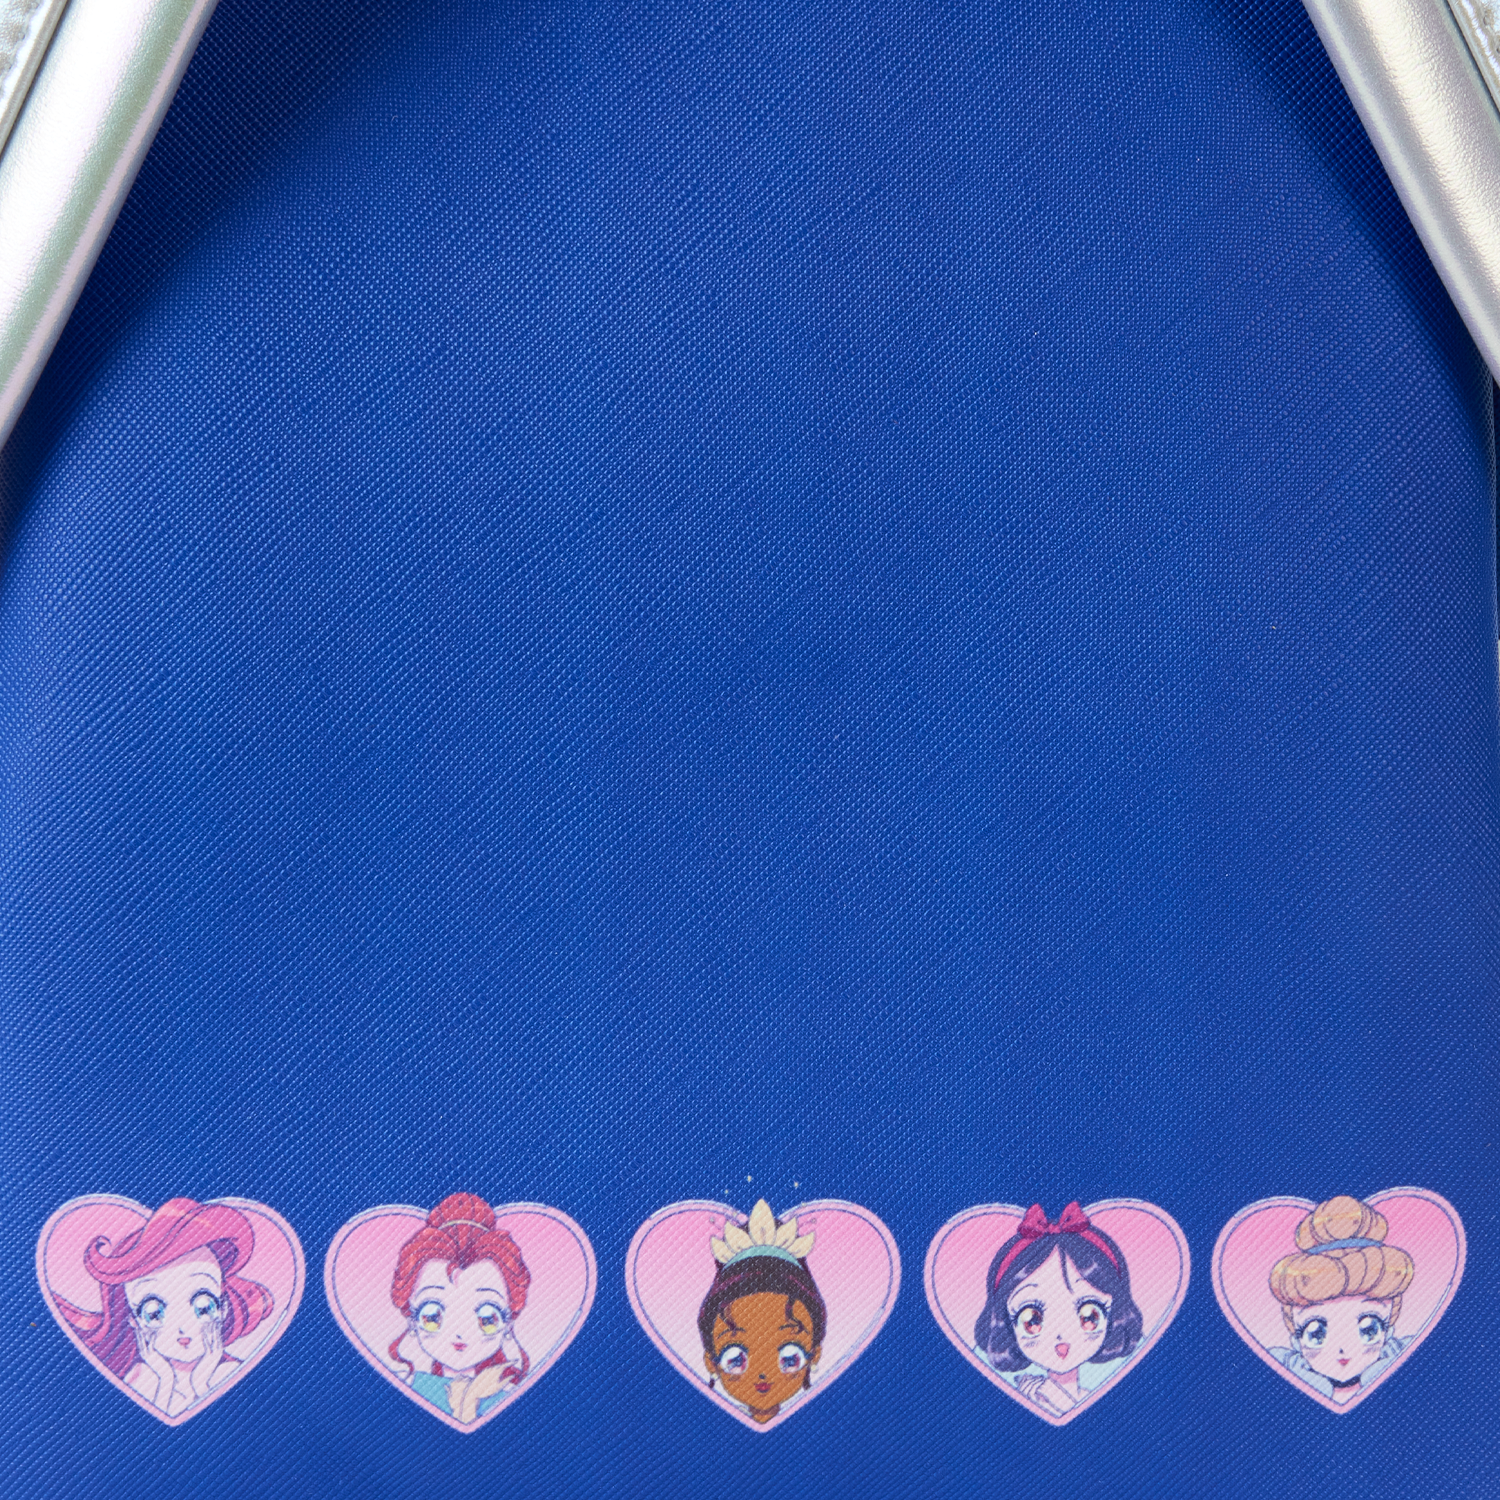 Disney | Manga Style Princesses Mini Backpack